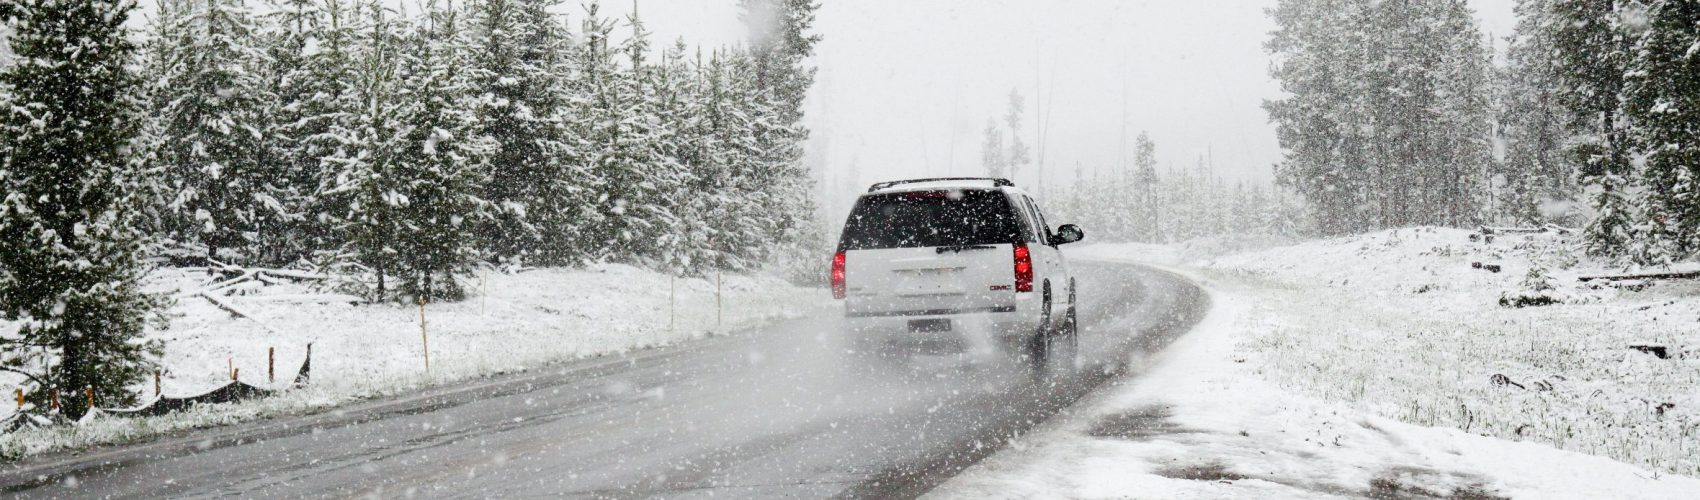 automotive winter driving tips in fauquier va